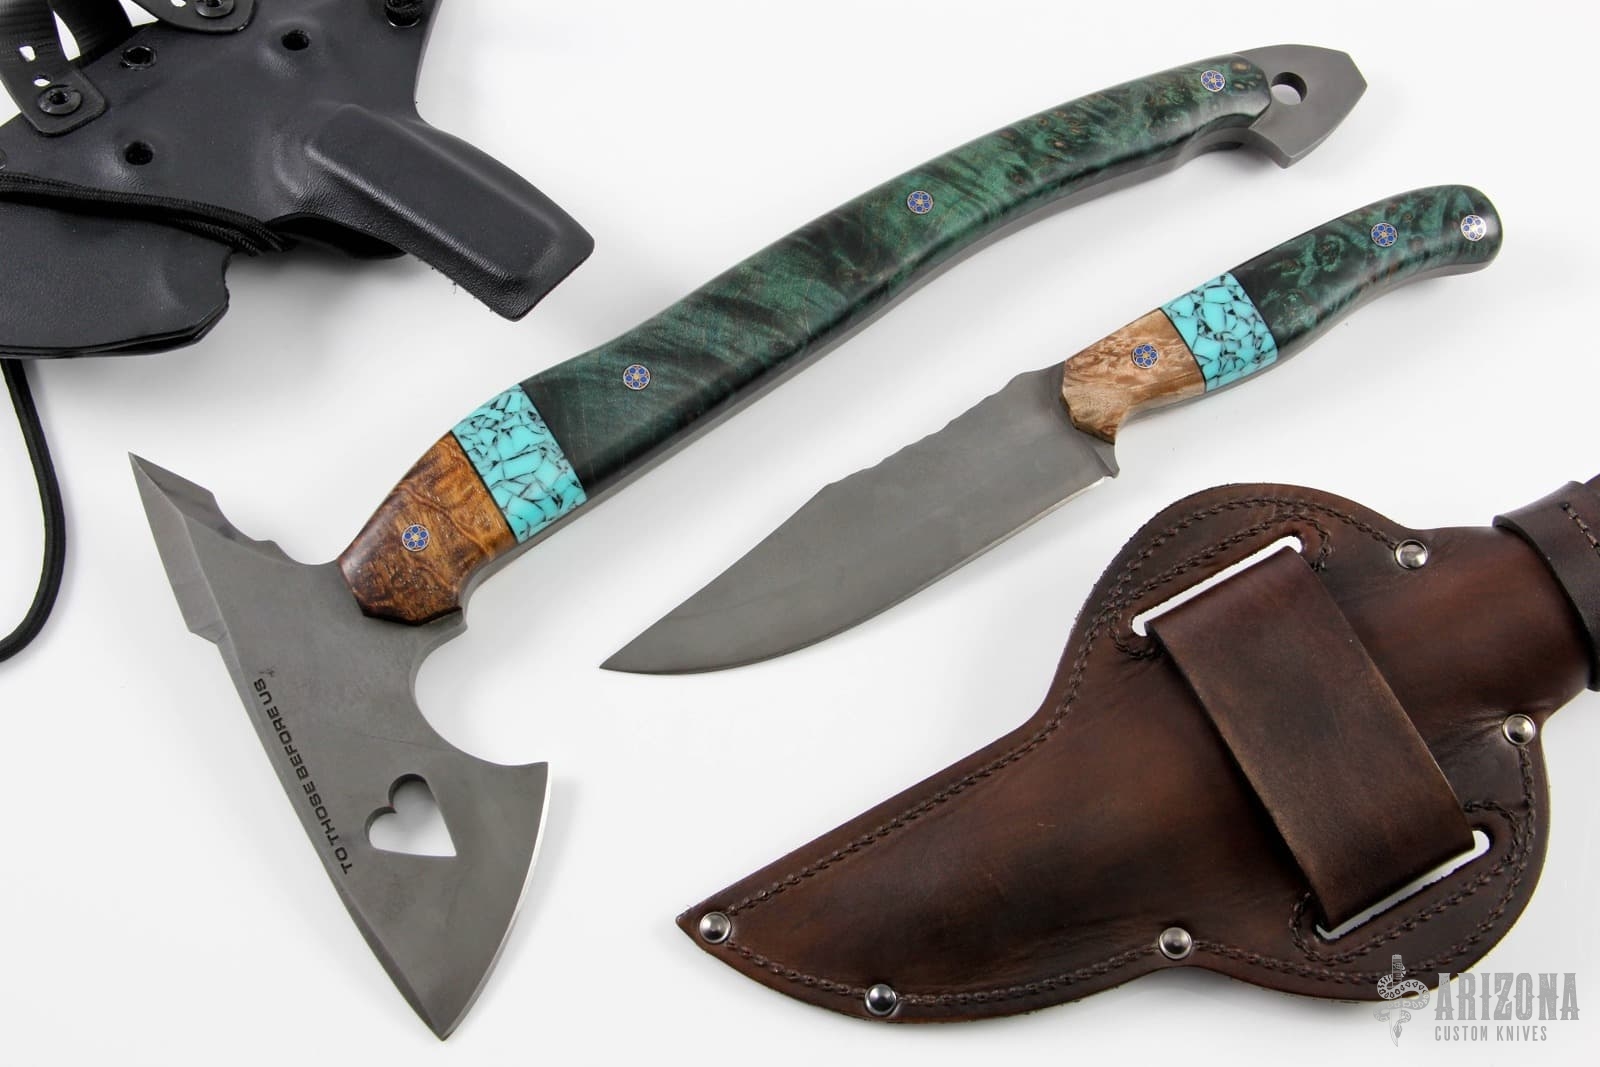 Crow Calls Knife Blade Sale - Save 20% on Popular Select Knife Blades